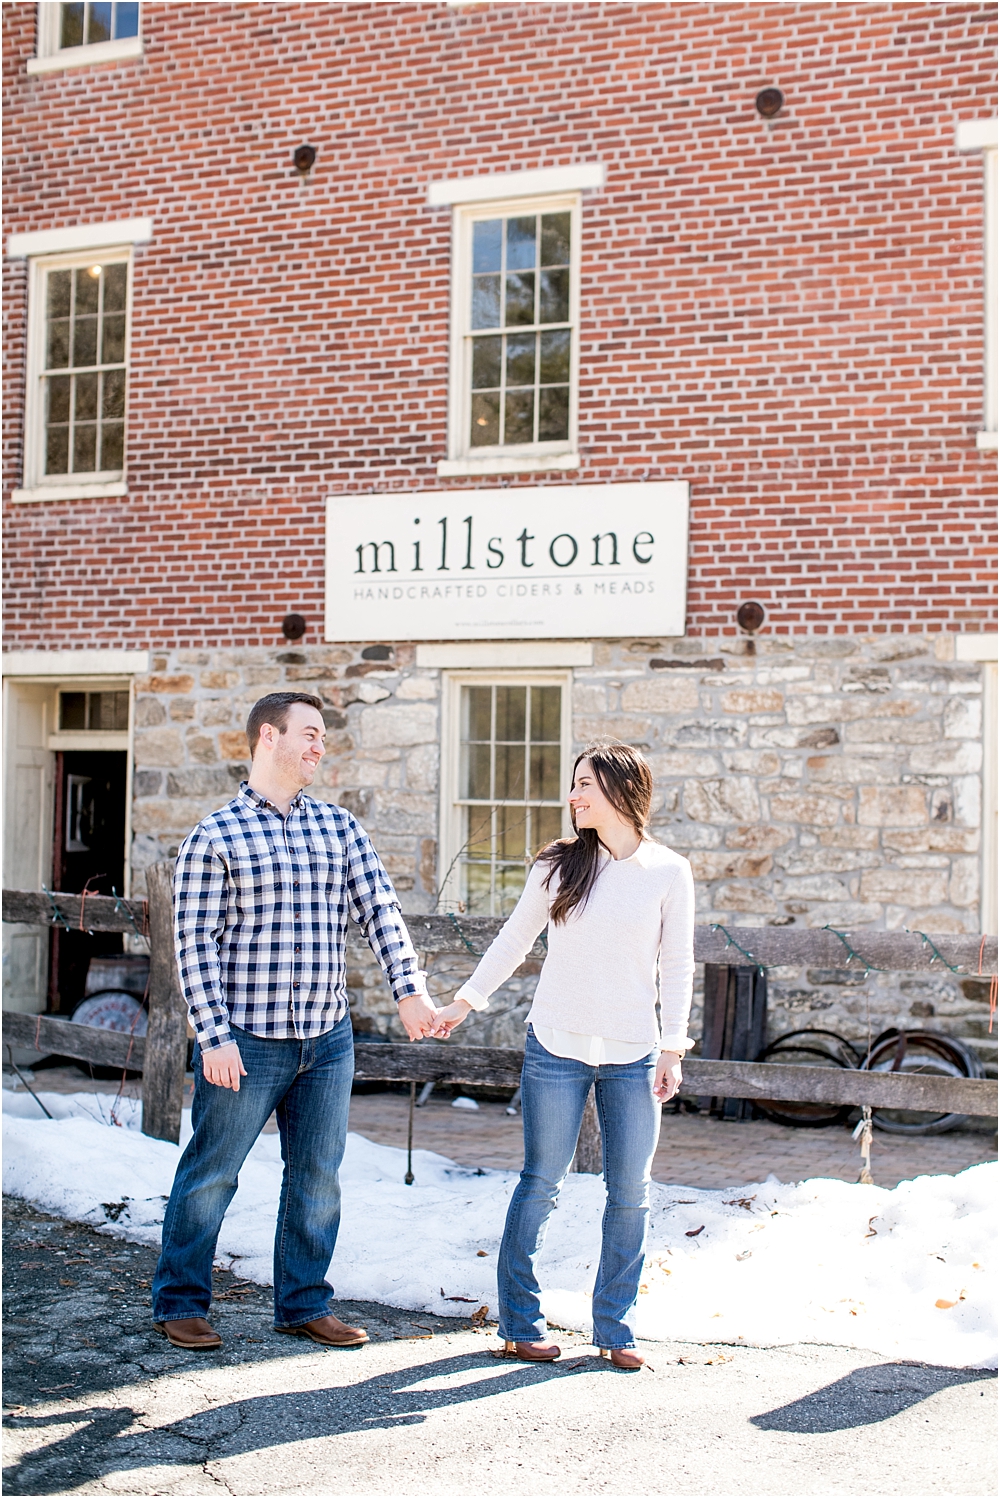 Millstone Cellars Engagement Session